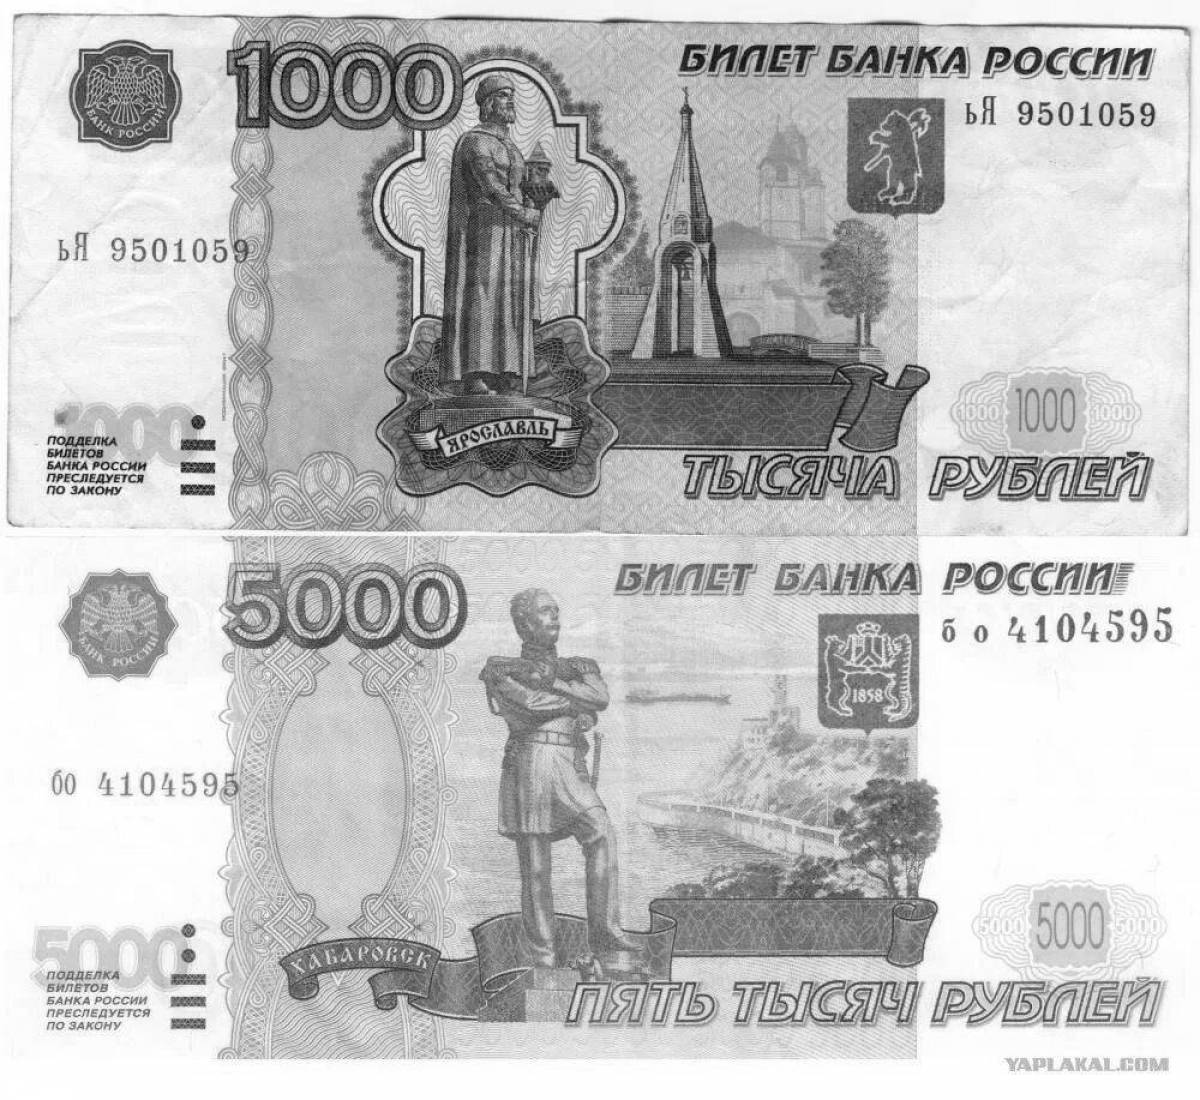 Joyful coloring of Russian money